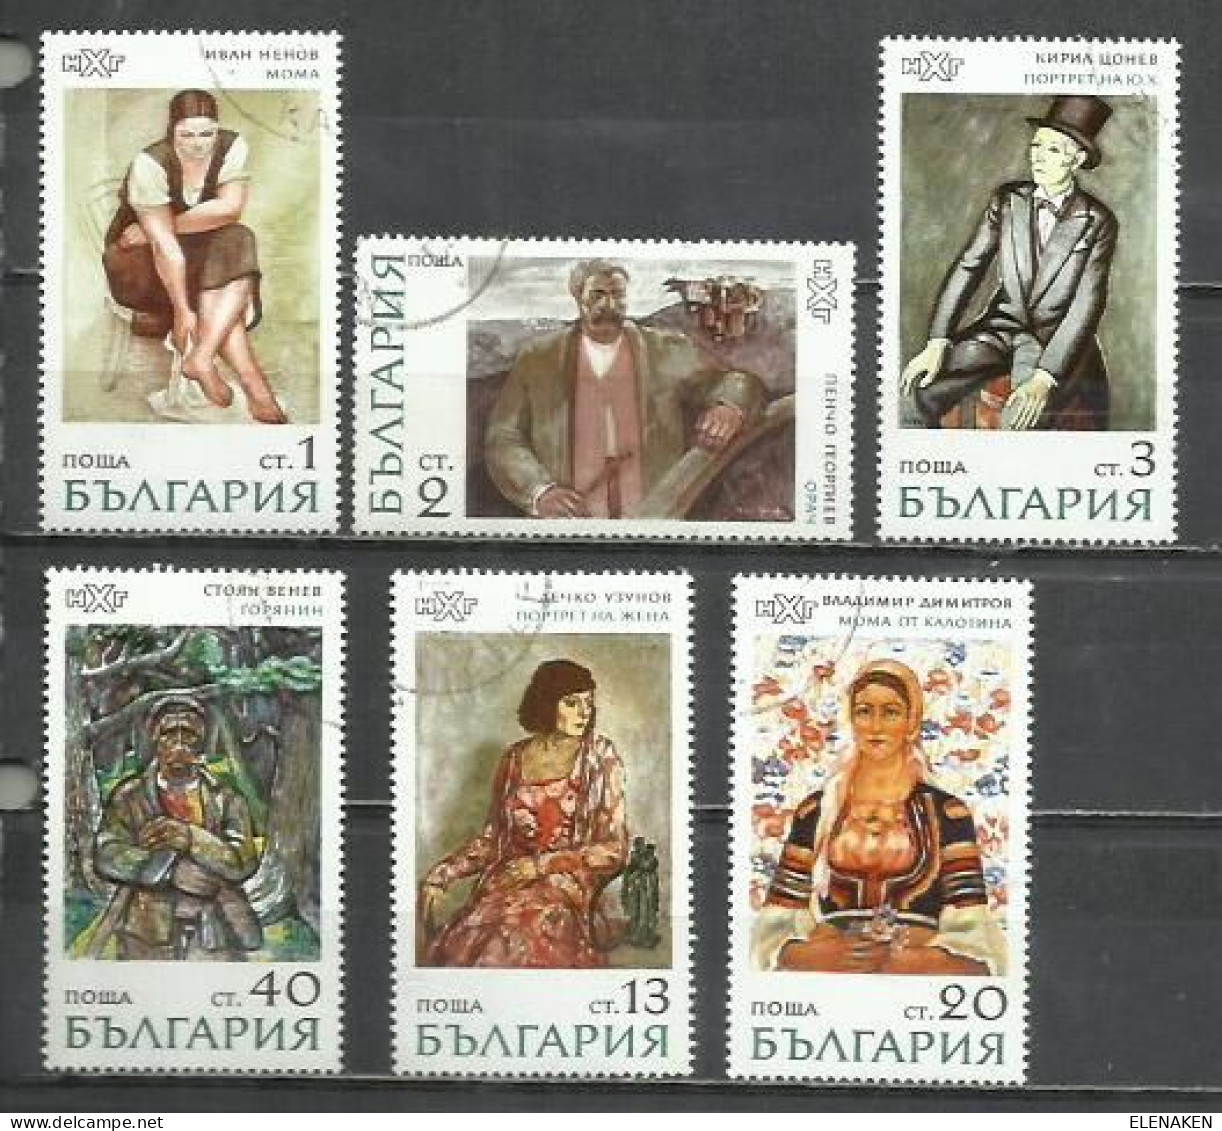 2645- BULGARIA SERIE COMPLETA PINTURA ARTE 1971 Nº 1877/1882 BONITOS SELLOS - Used Stamps